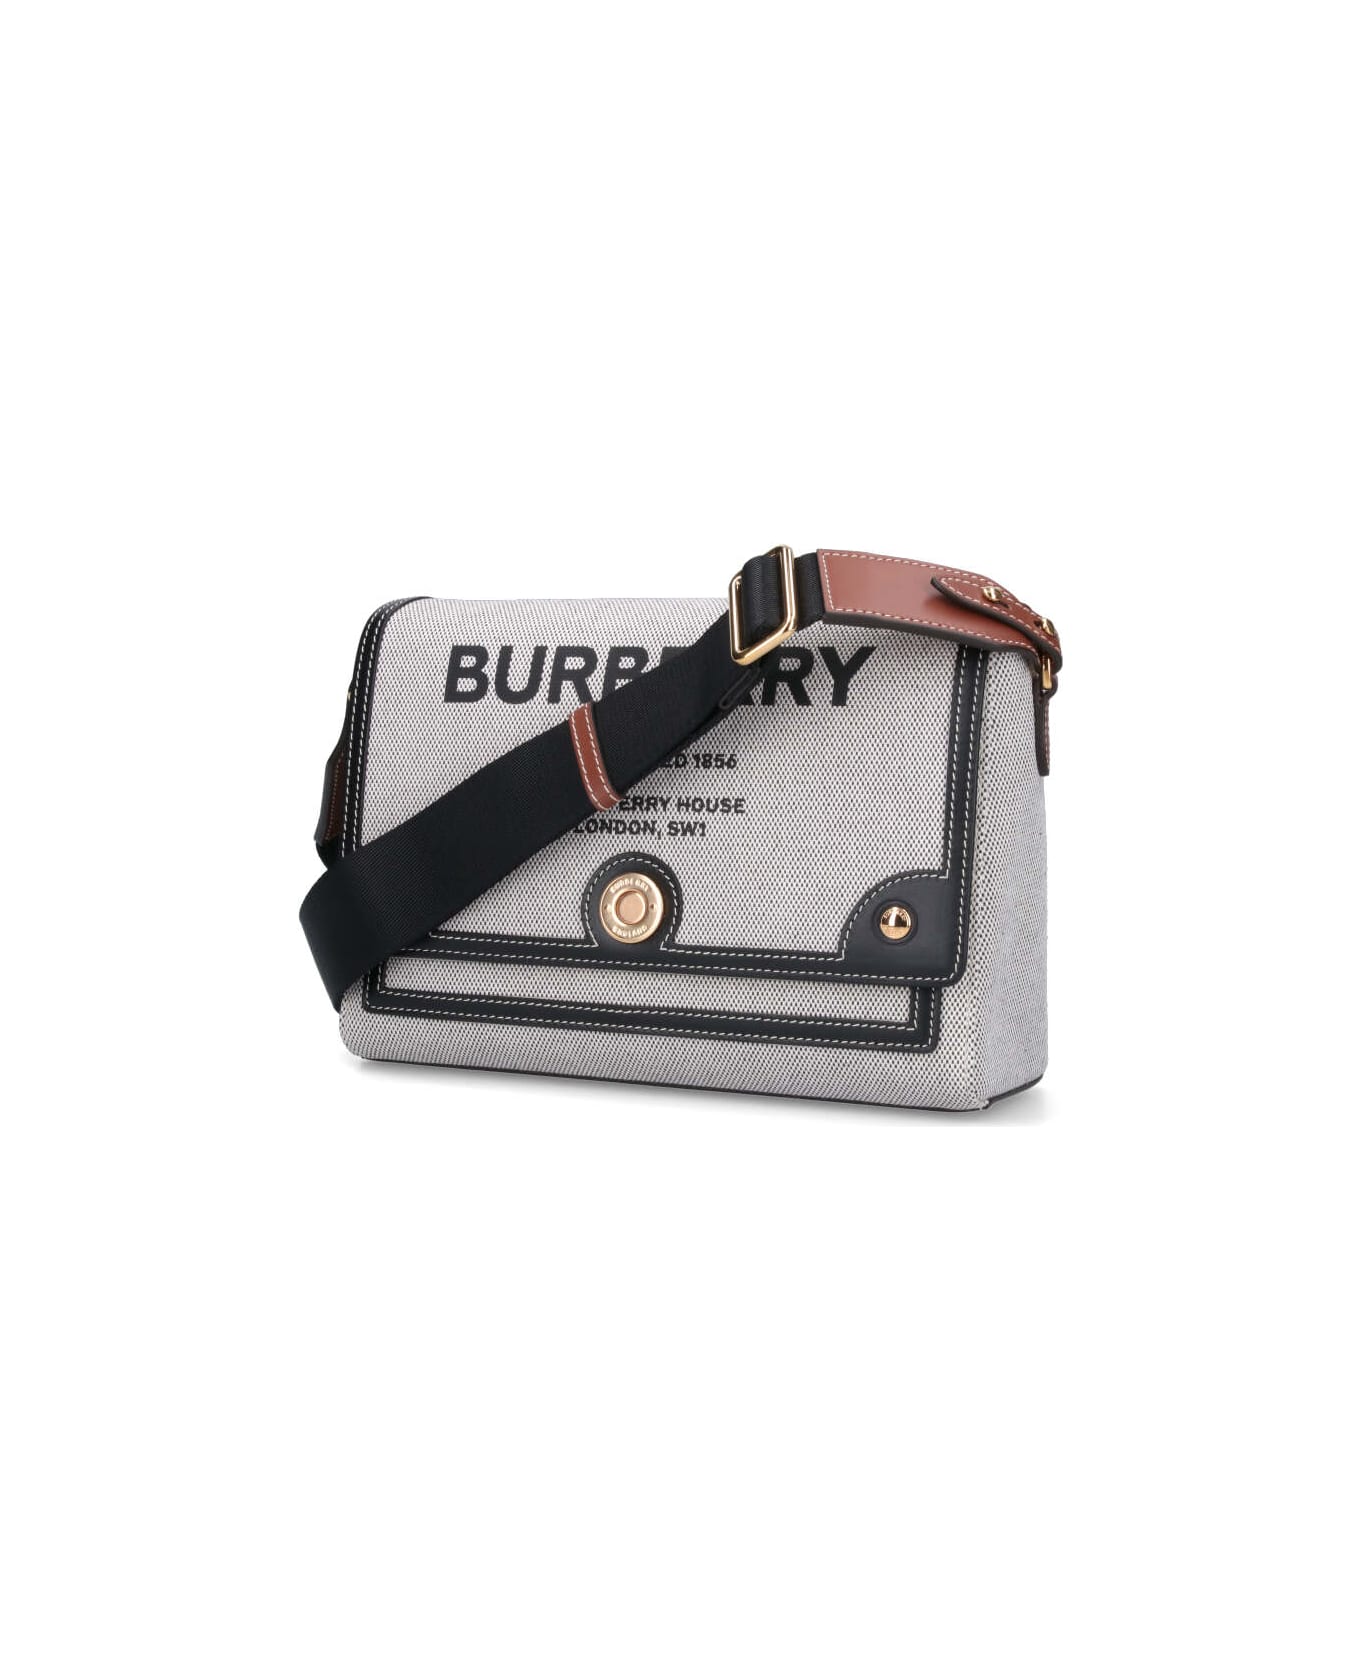 Burberry - horseferry Note Shoulder Bag - Gray